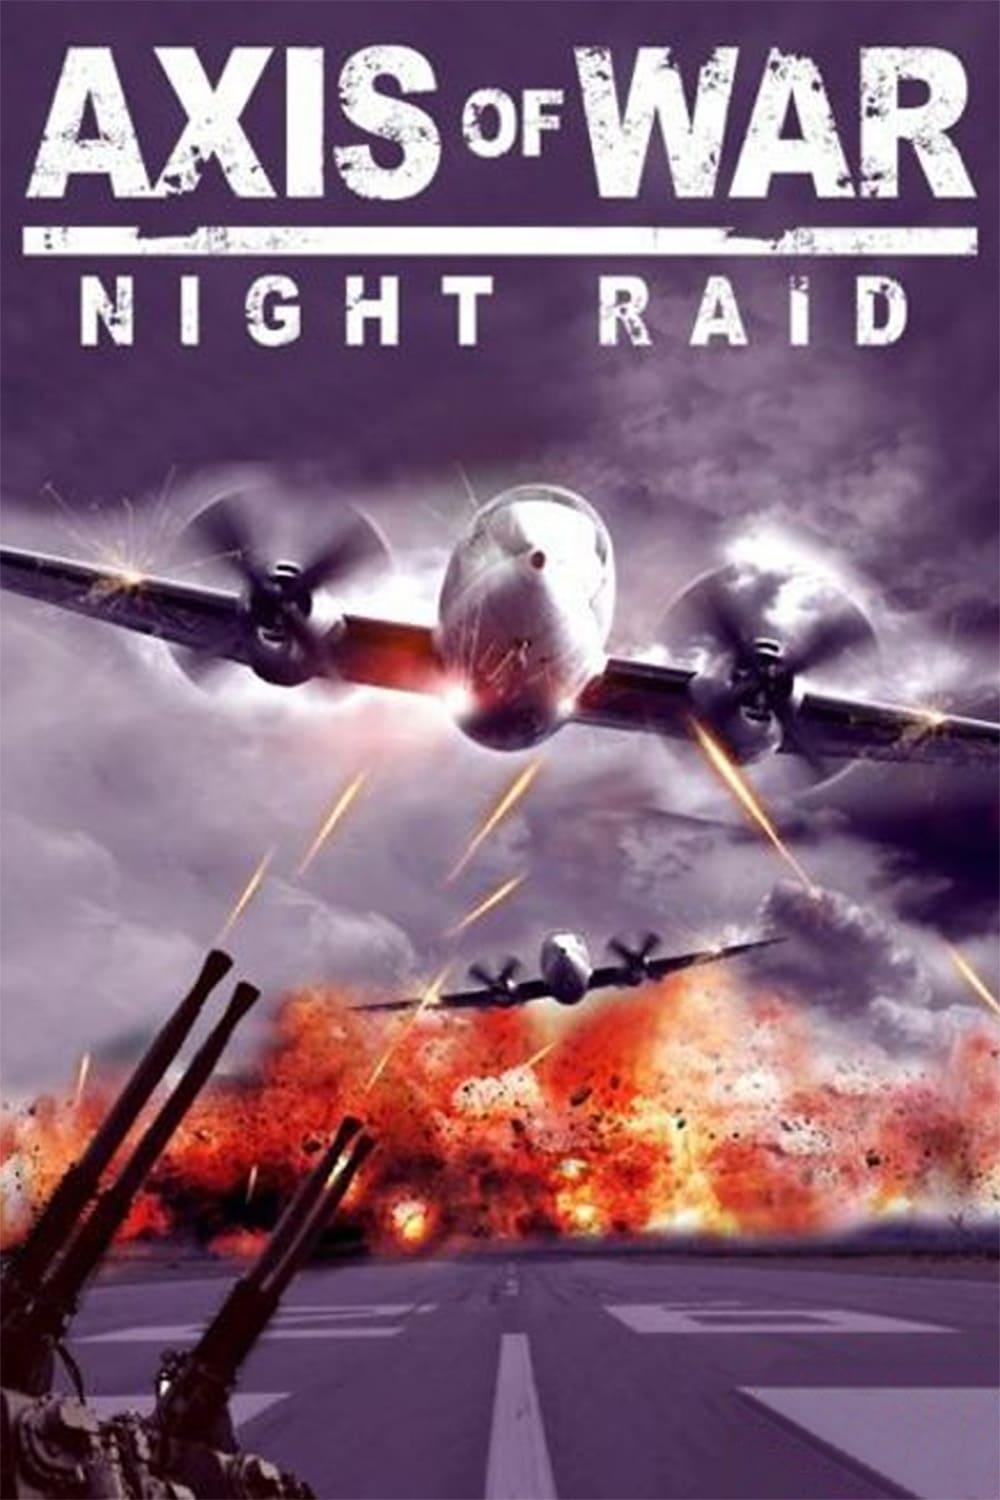 Night Attack poster